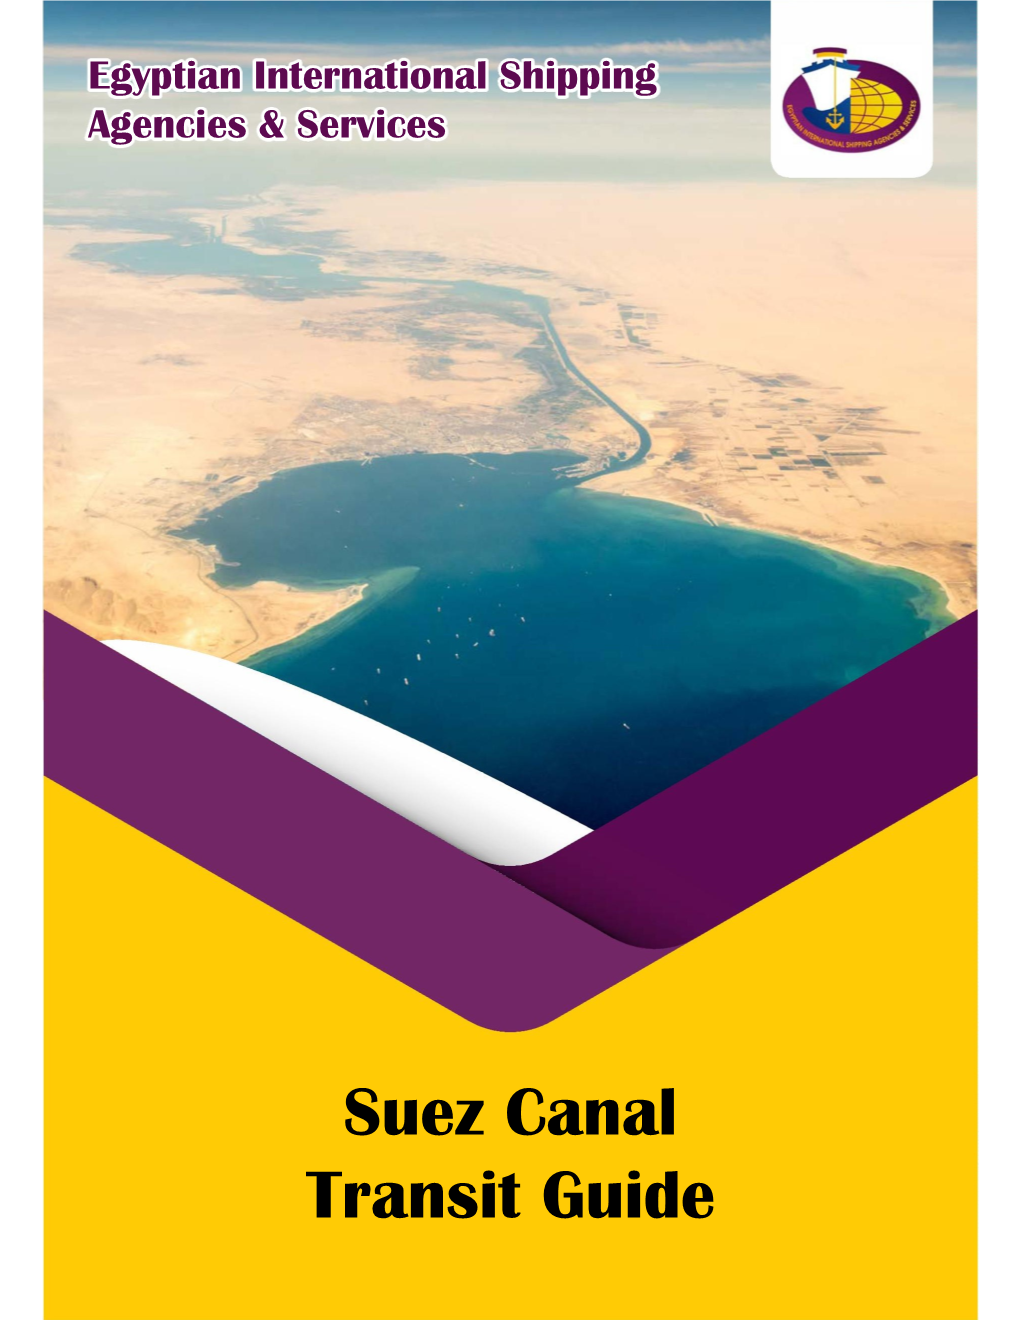 Suez Canal Transit Guide